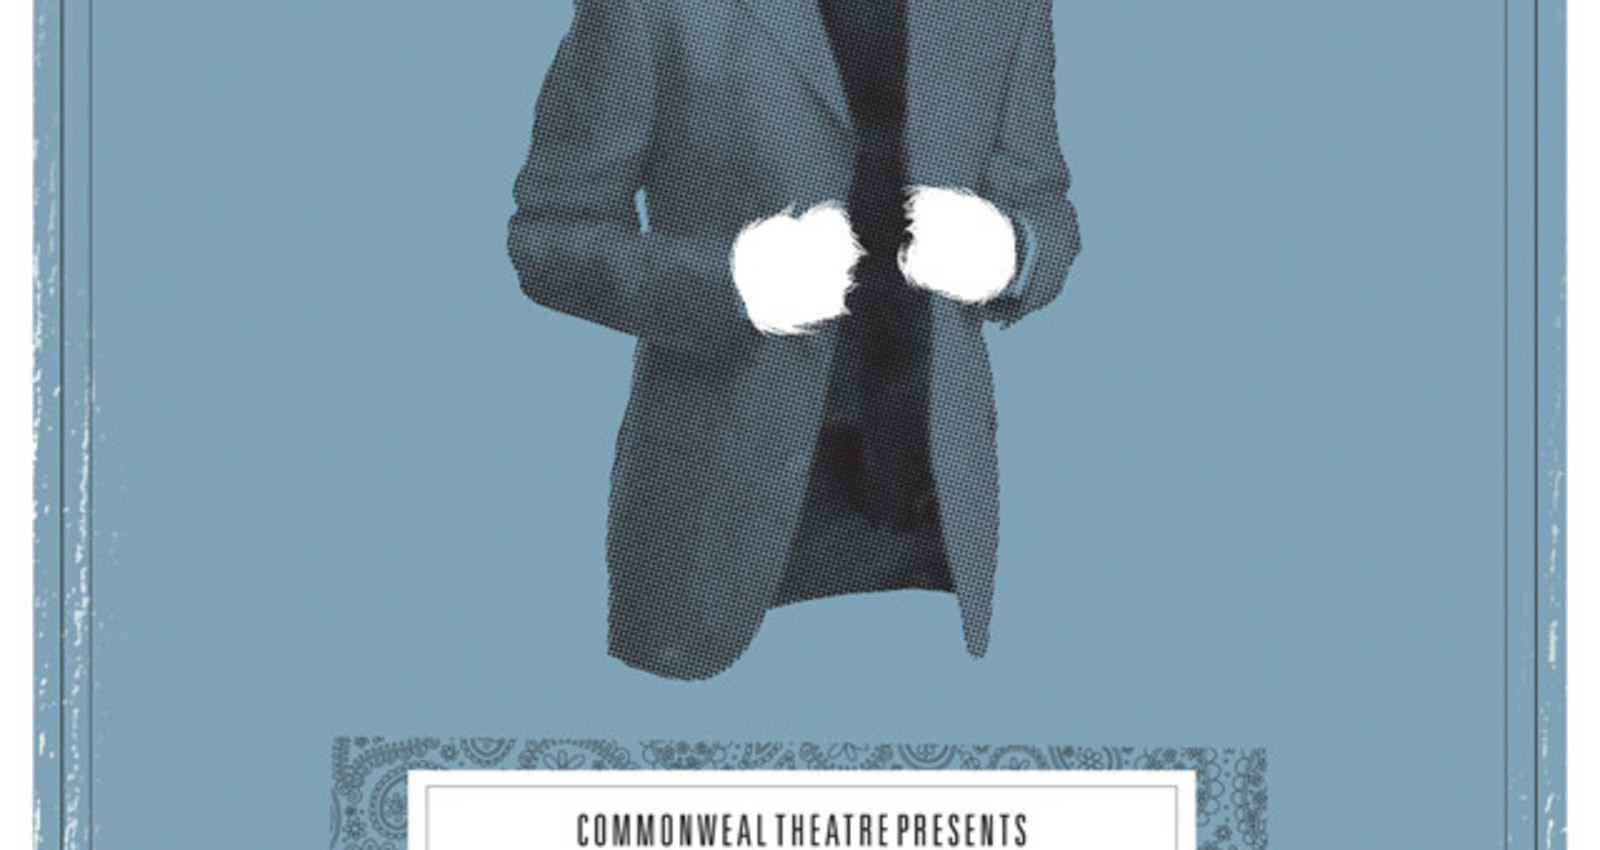 Commonweal Theatre 2008 Season Posters